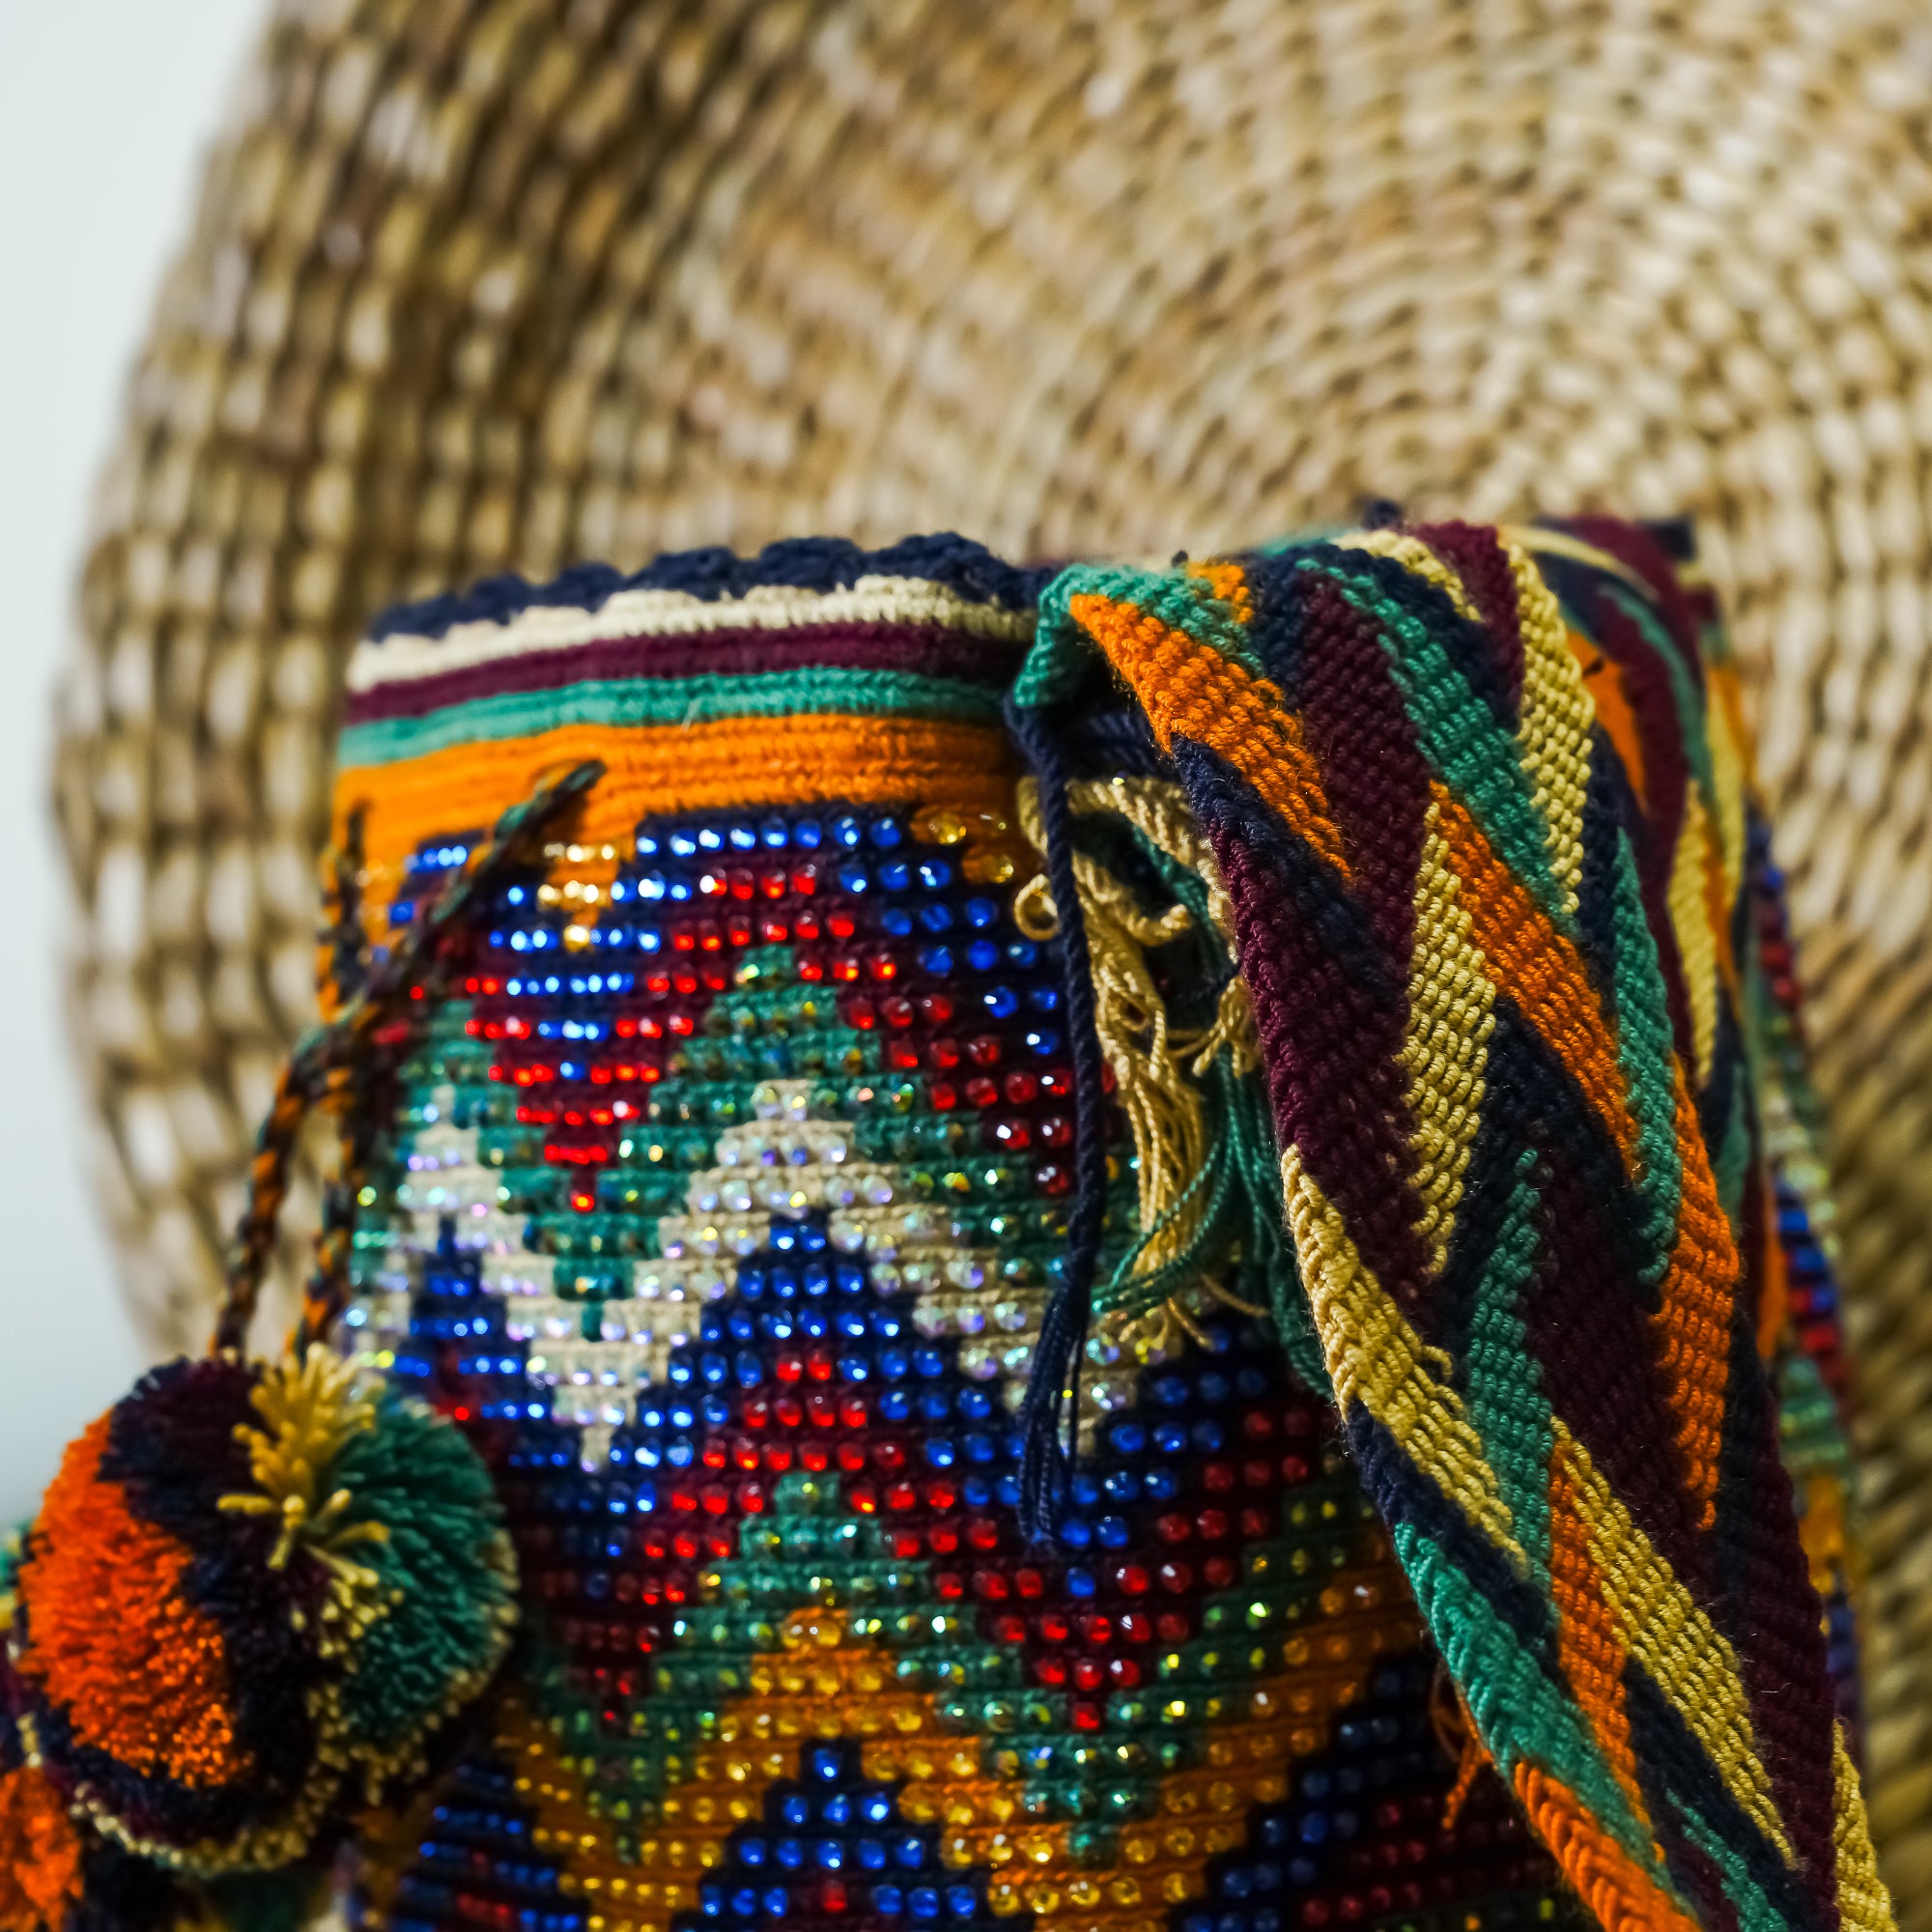 Colombian Handmade Bag (Wayuu - Model #10)